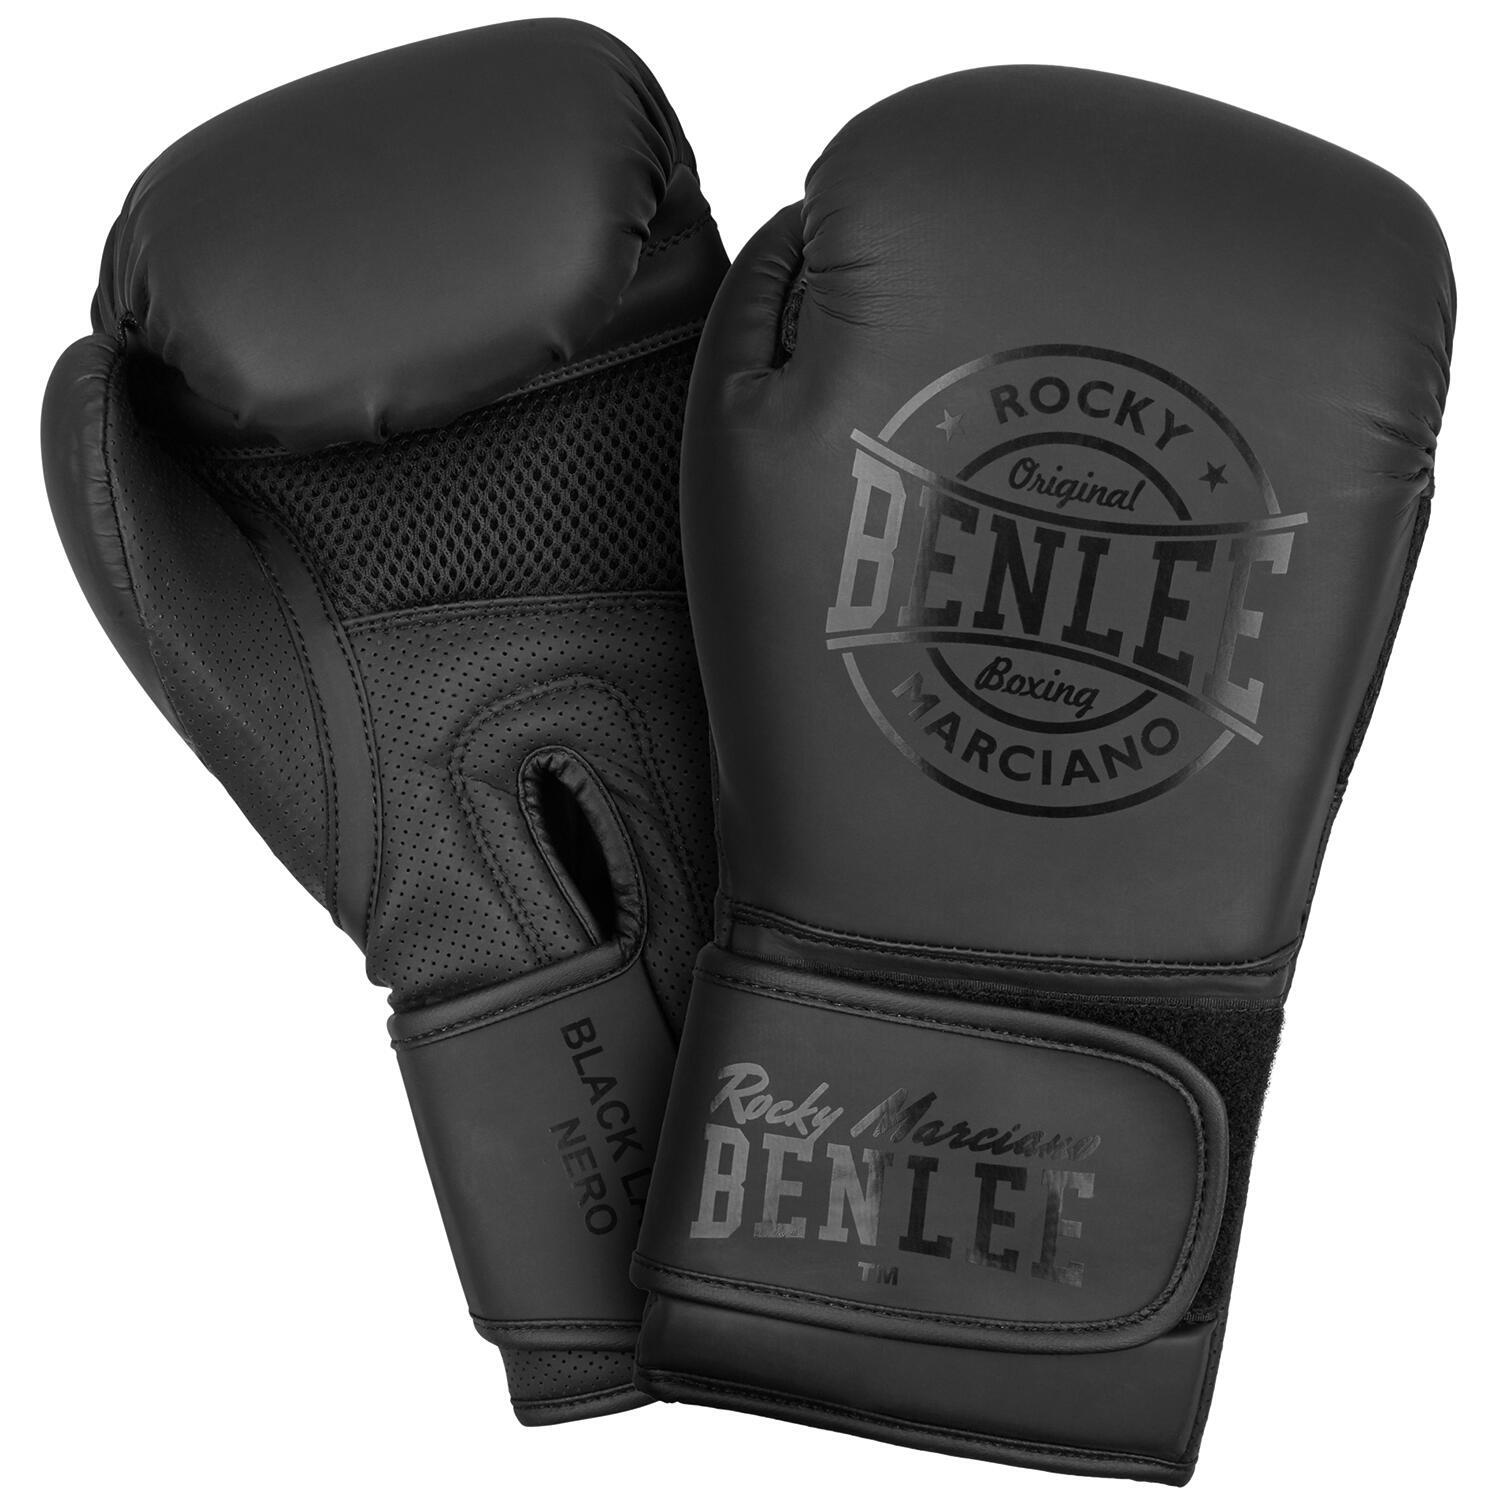 Боксерские перчатки BenLee Black Label Nero 12 унций, черный боксерские перчатки venum challenger 2 0 boxing gloves black black 10 унций